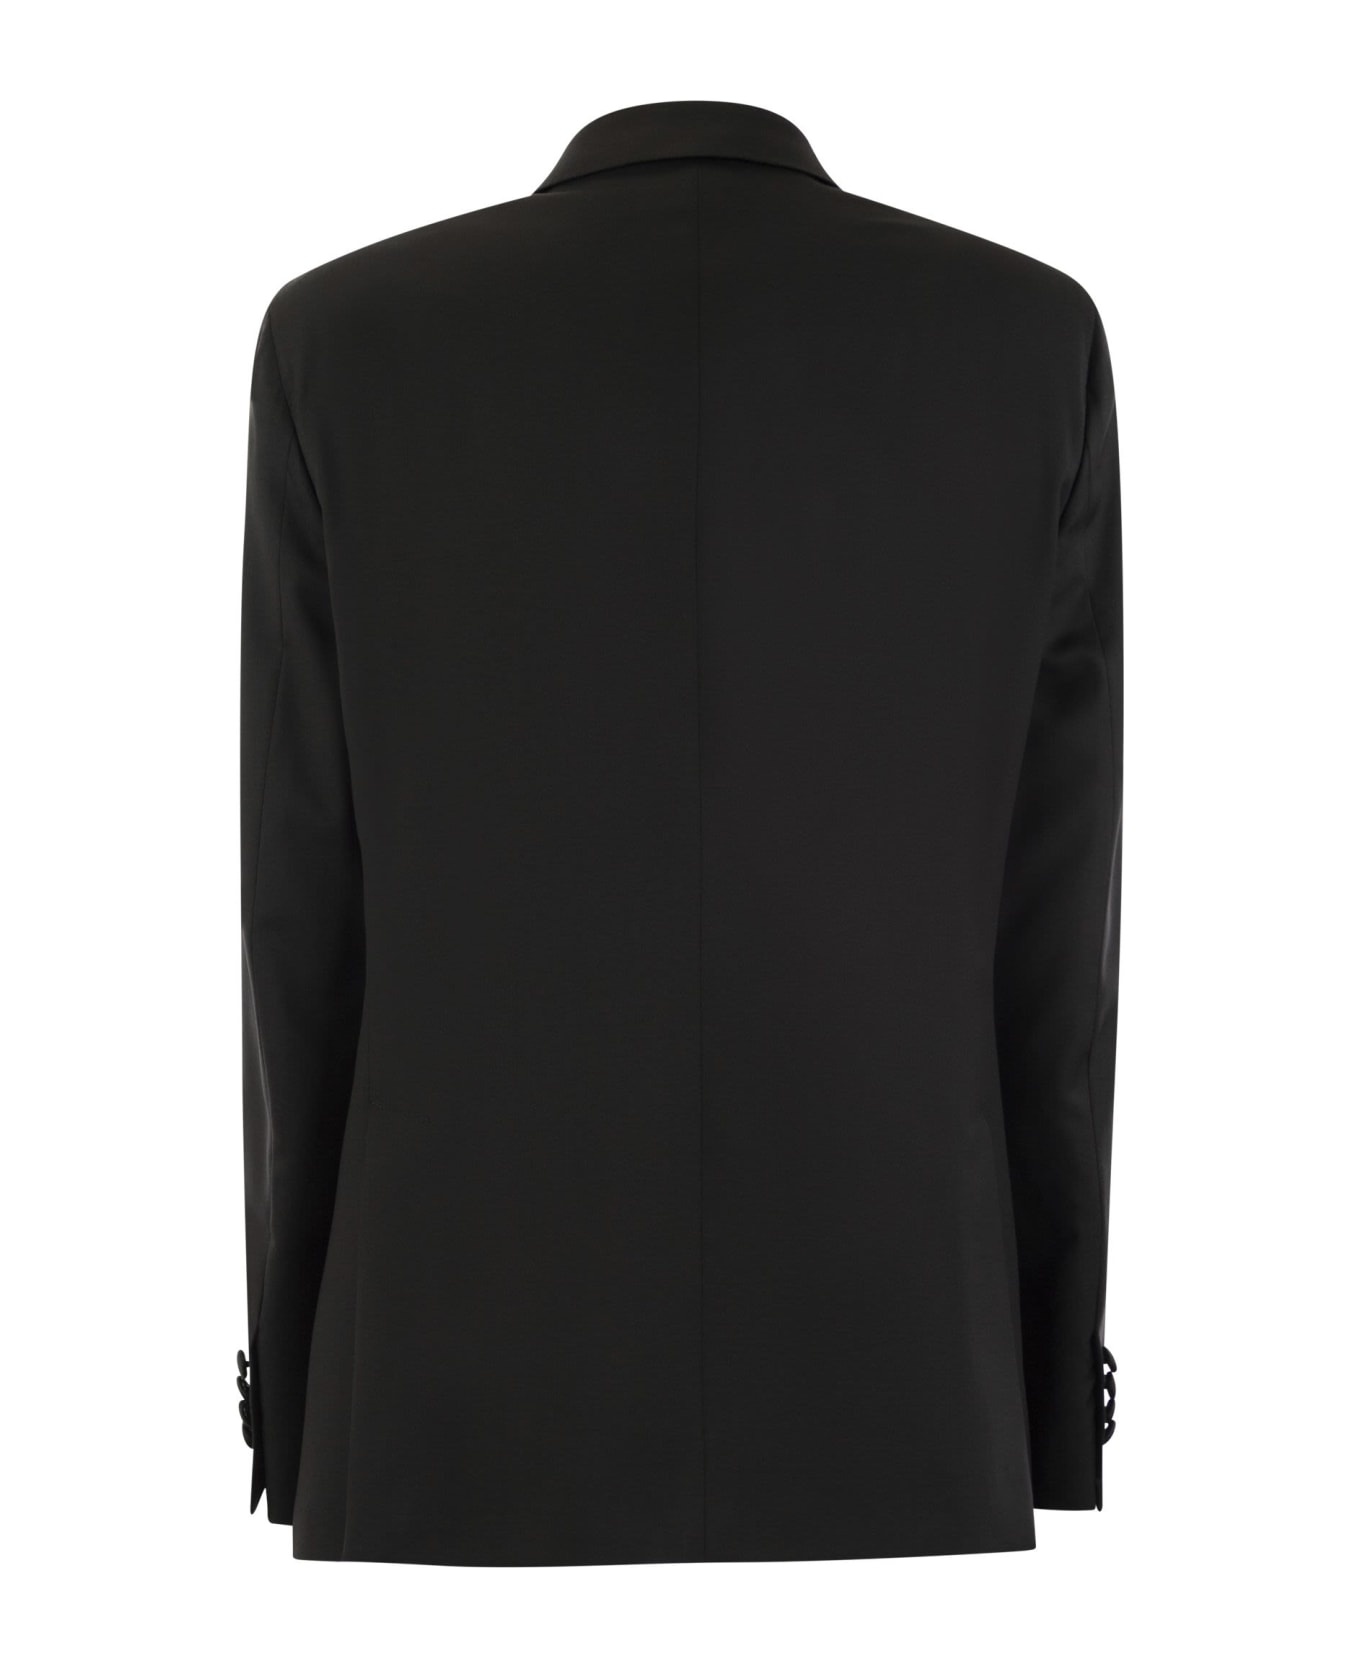 Saulina Milano Fresh Wool Double Breasted Jacket - Black